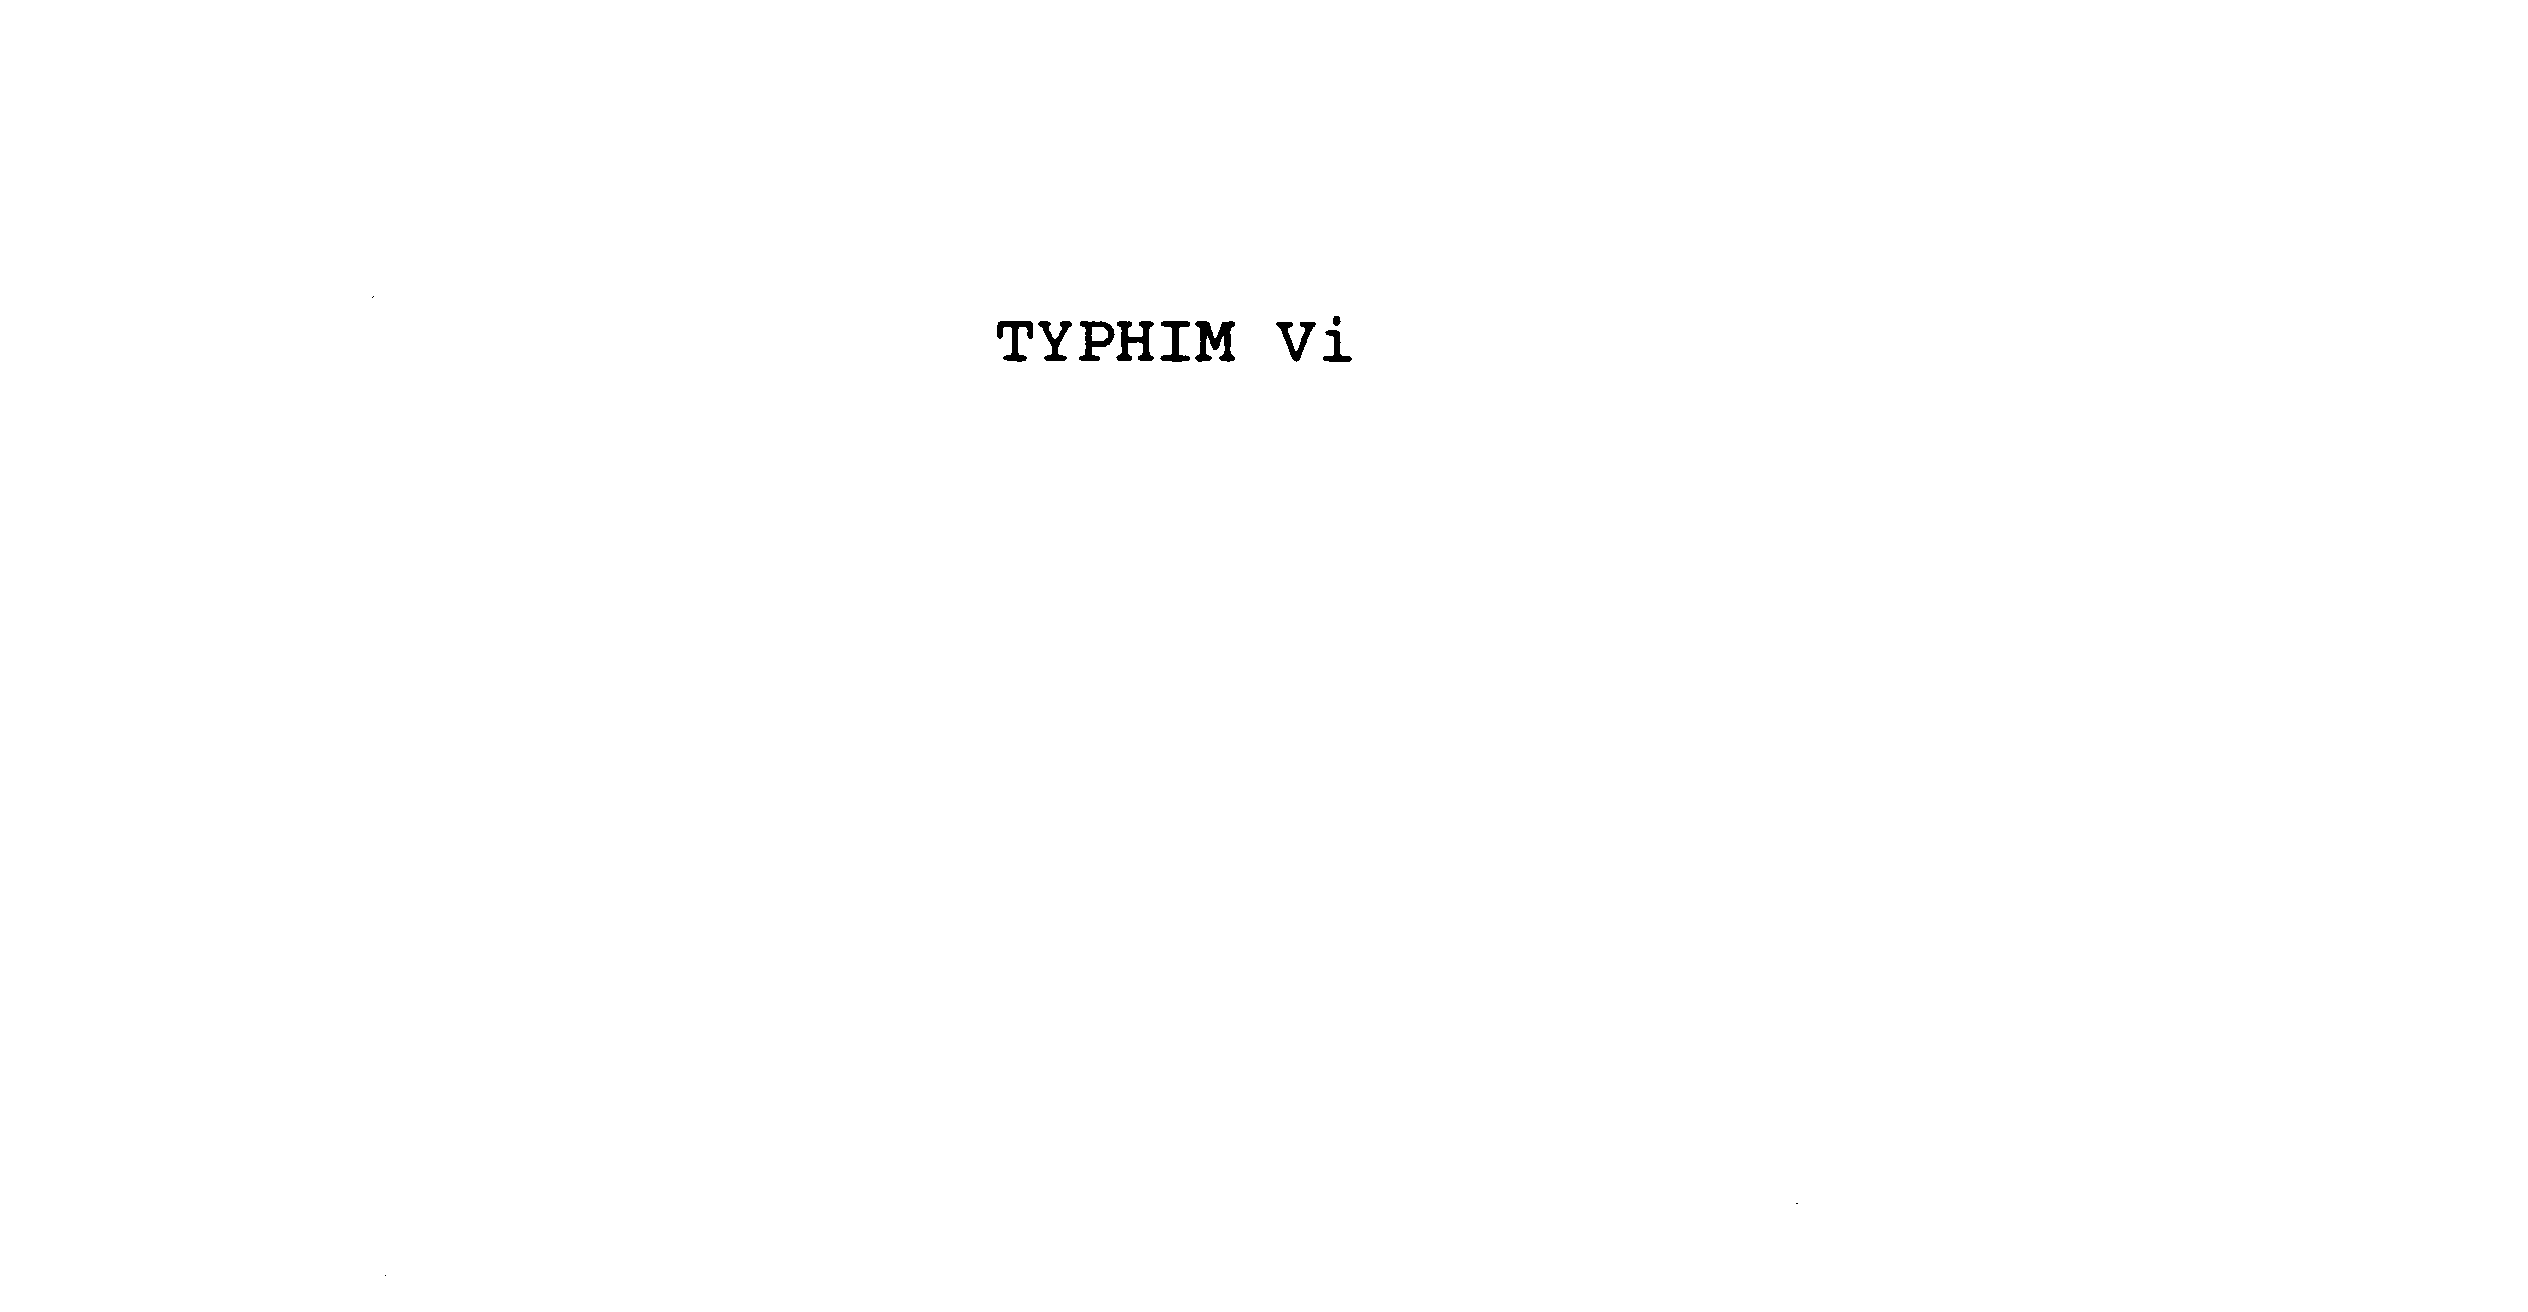 TYPHIM VI